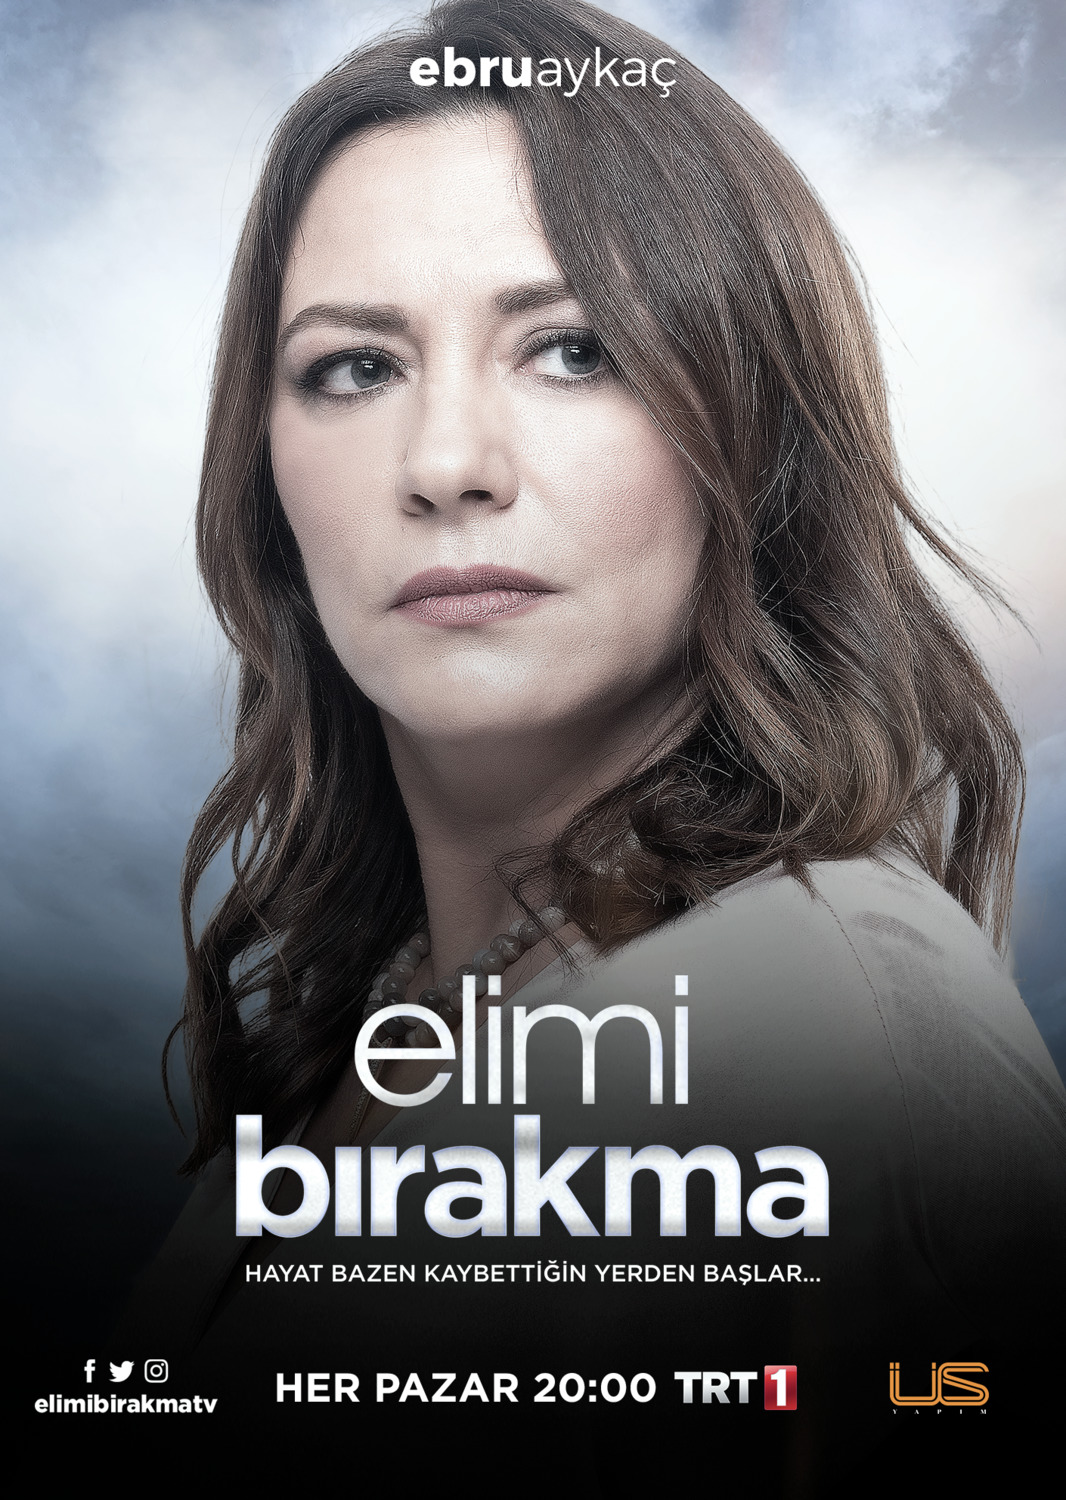 Extra Large TV Poster Image for Elimi birakma (#14 of 20)